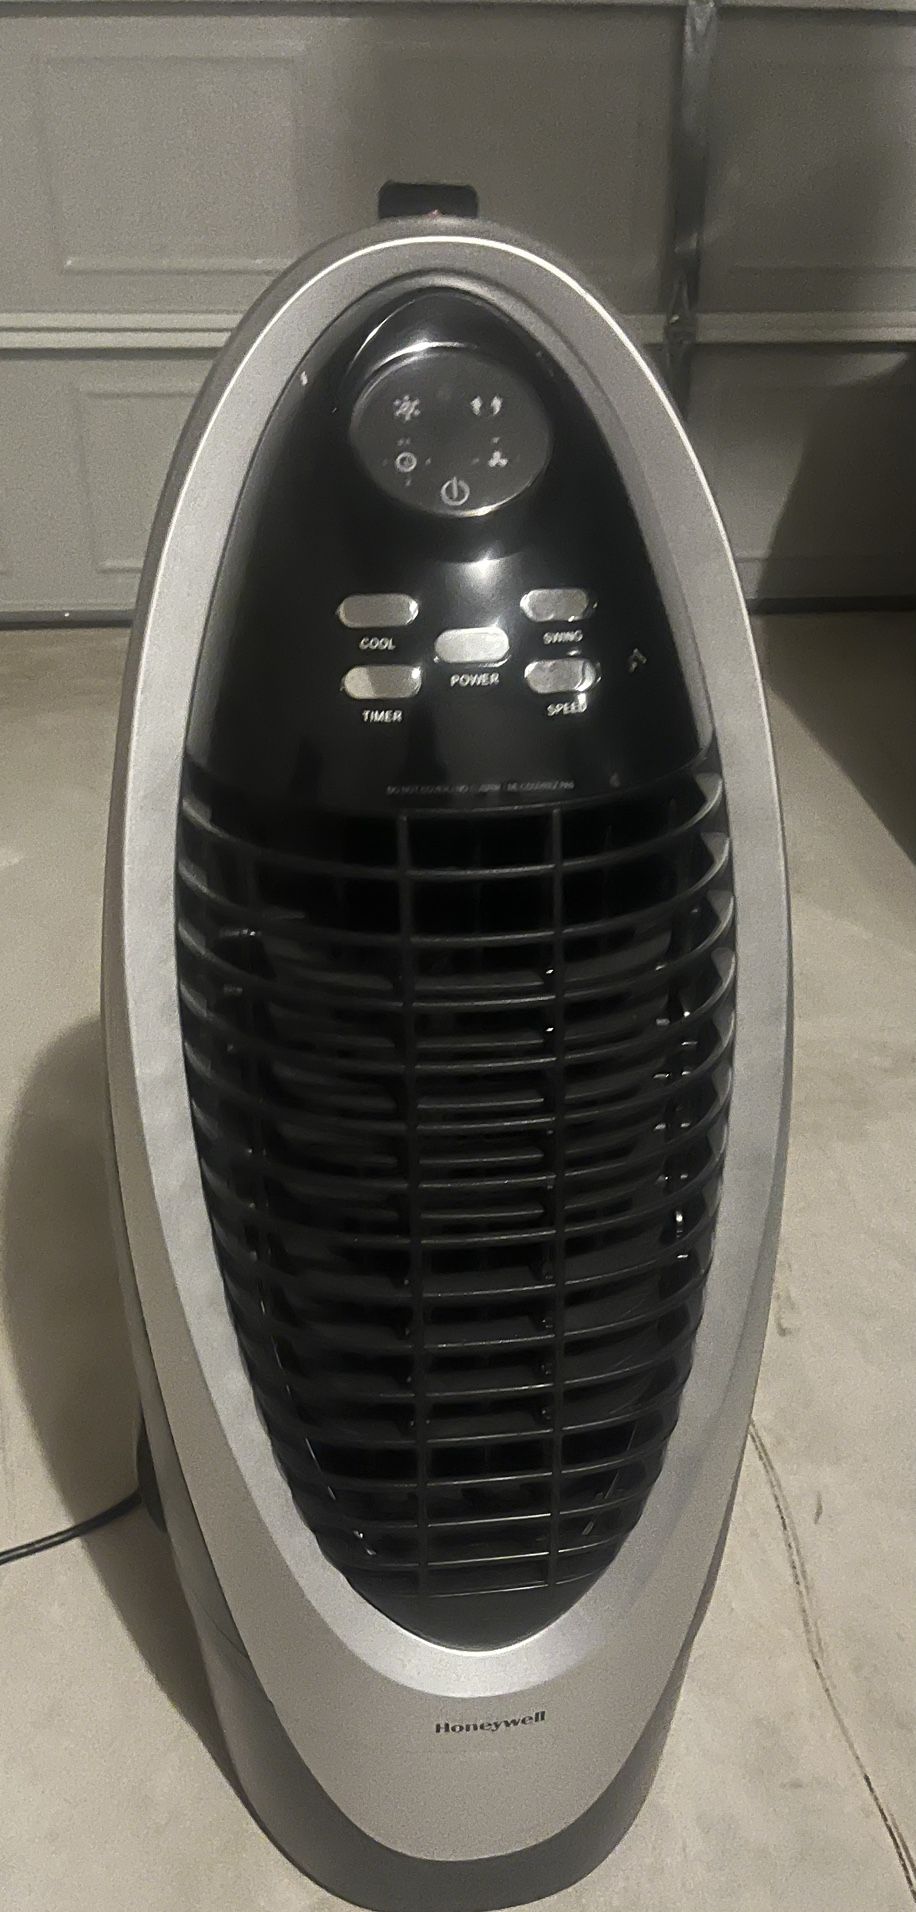 Honeywell Portable Air Conditioner